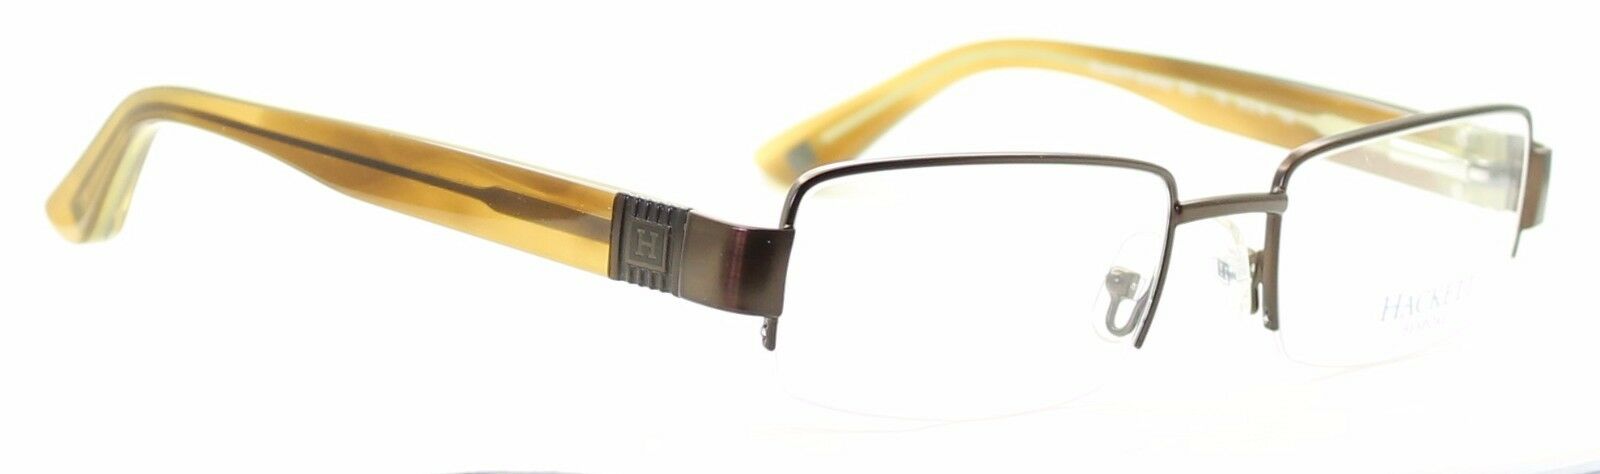 HACKETT Bespoke HEB035 10 Eyewear FRAMES NEW Glasses Optical Eyeglasses TRUSTED